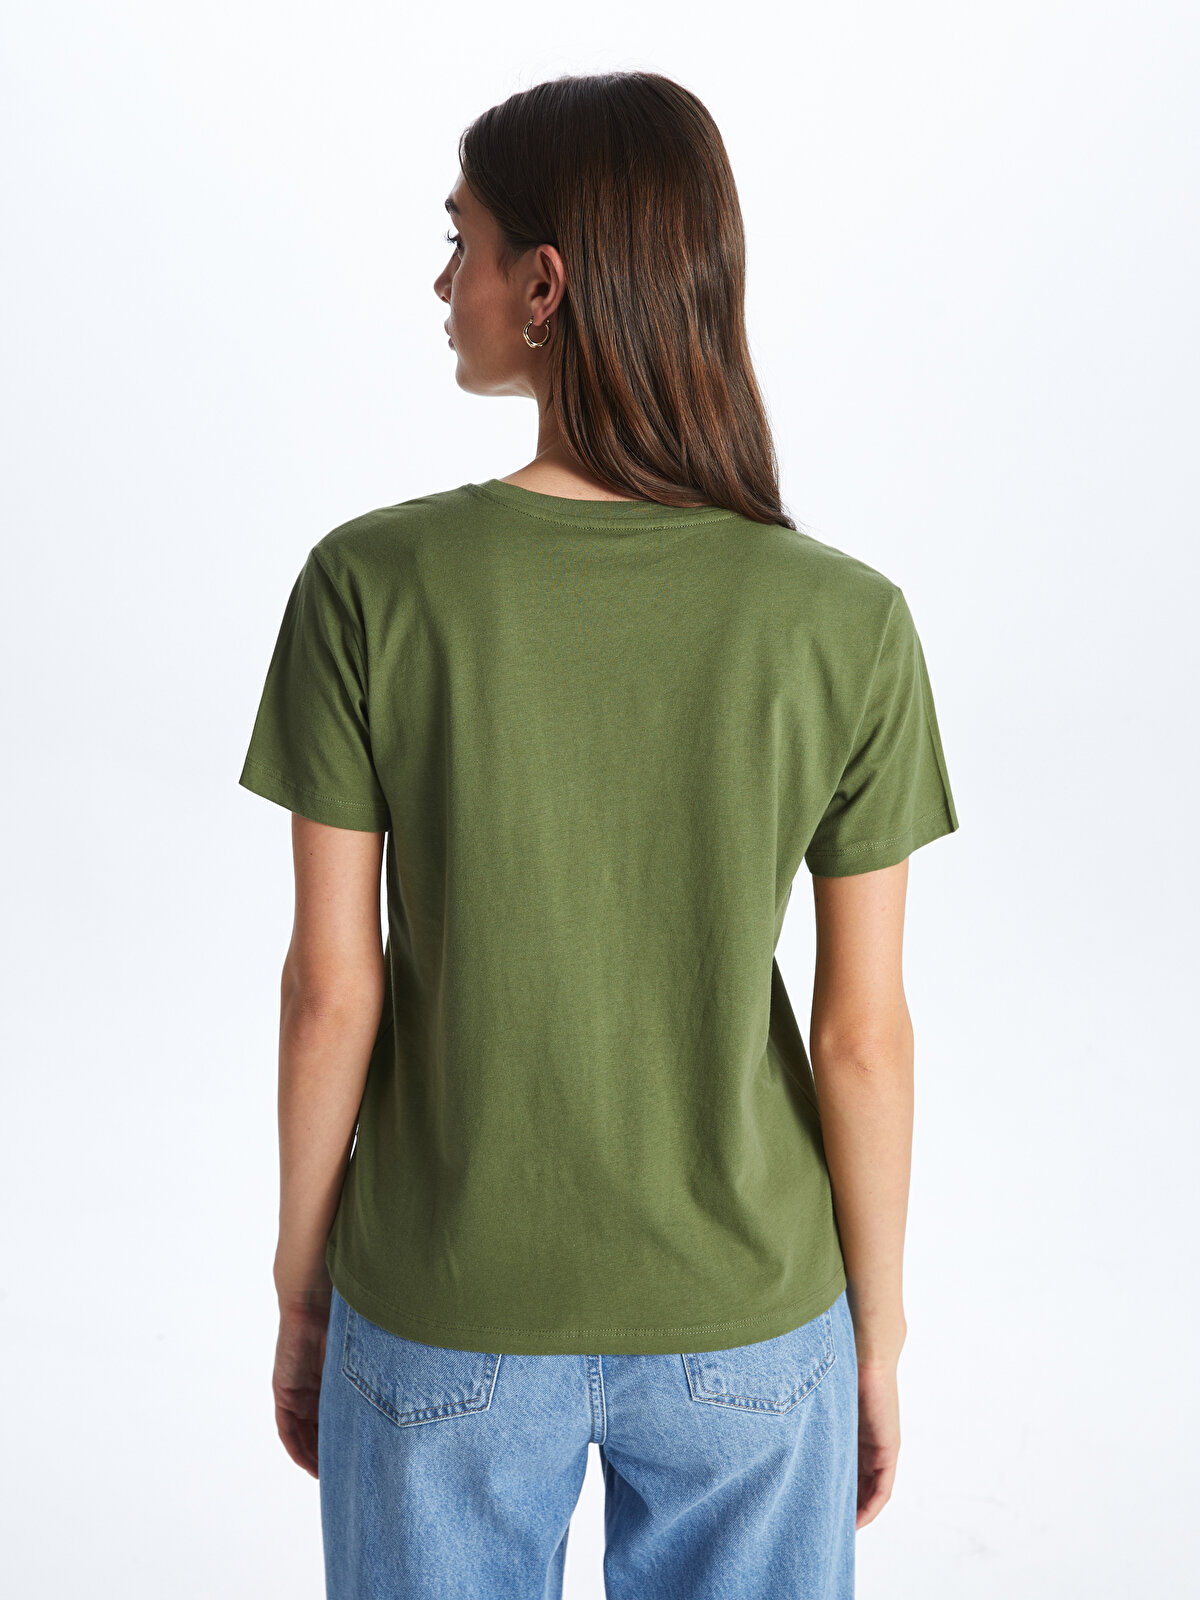 Crew Neck Printed Short Sleeve Women's T-shirt -S47315Z8-HBV 